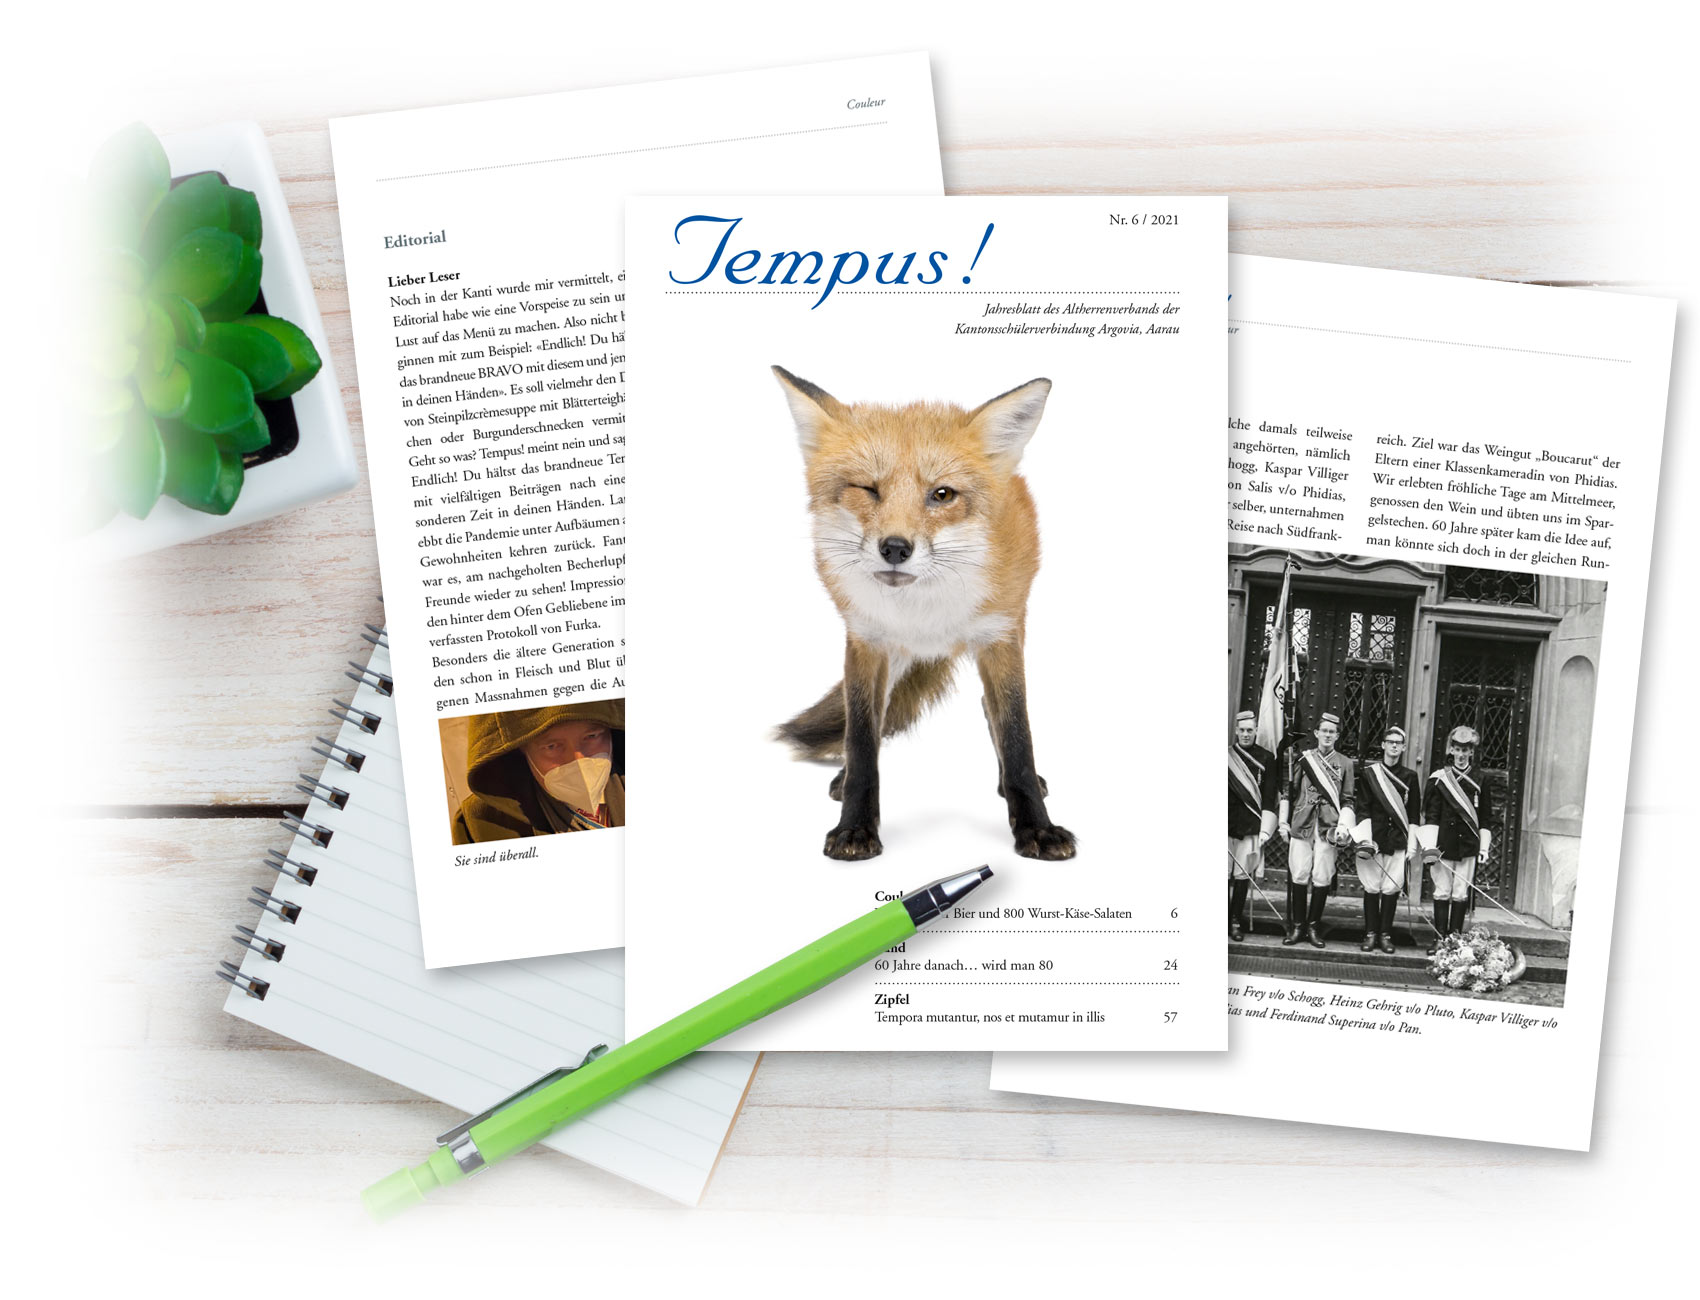 Tempus! Jahresblatt Nr. 6 / 2021 des Altherrenverbandes der Kantonsschülerverbindung Argovia, Aarau